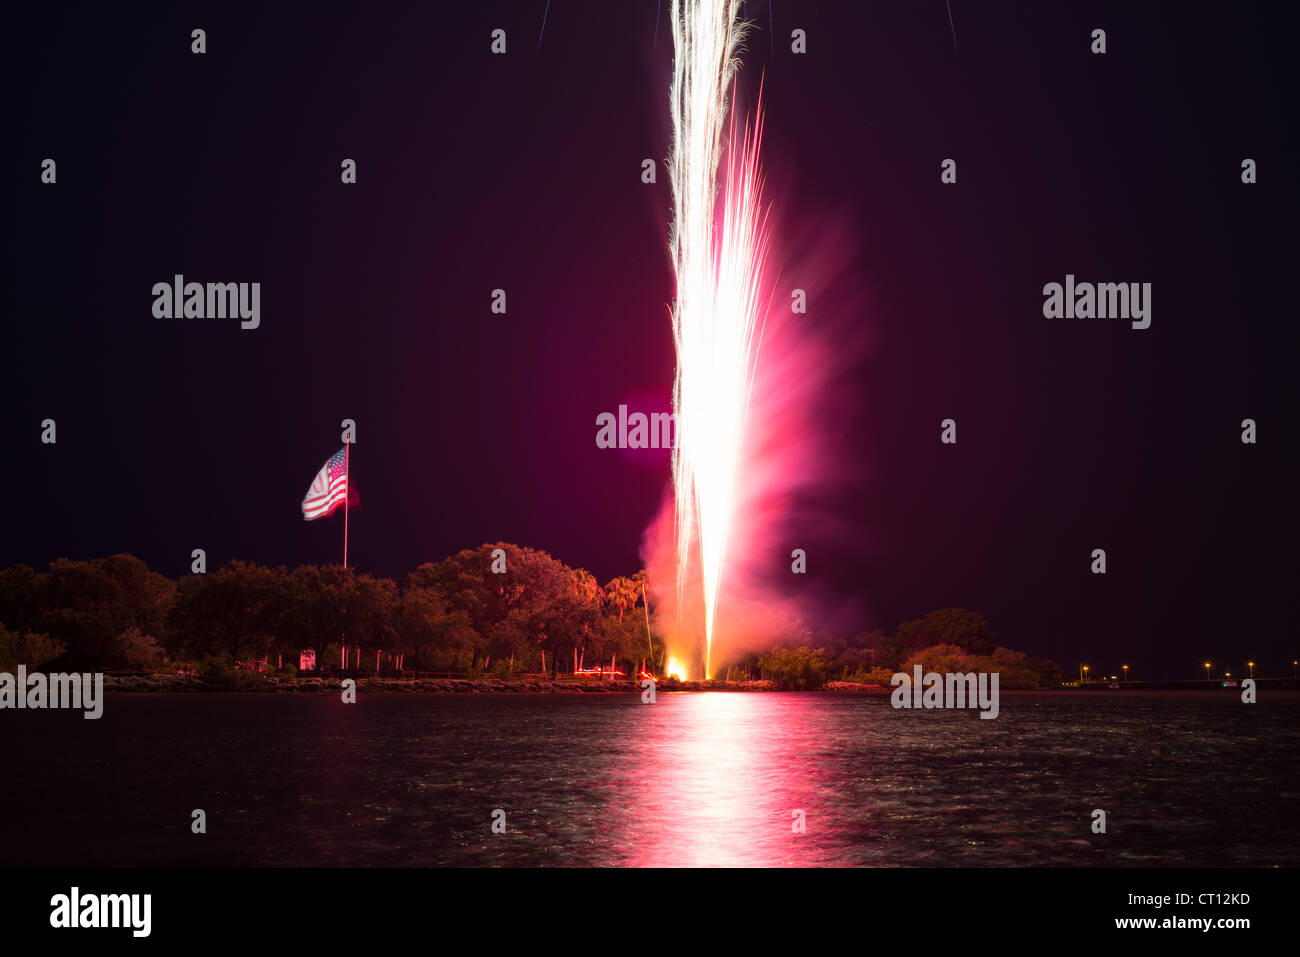 Fireworks celebration highlighting the illuminated American flag from